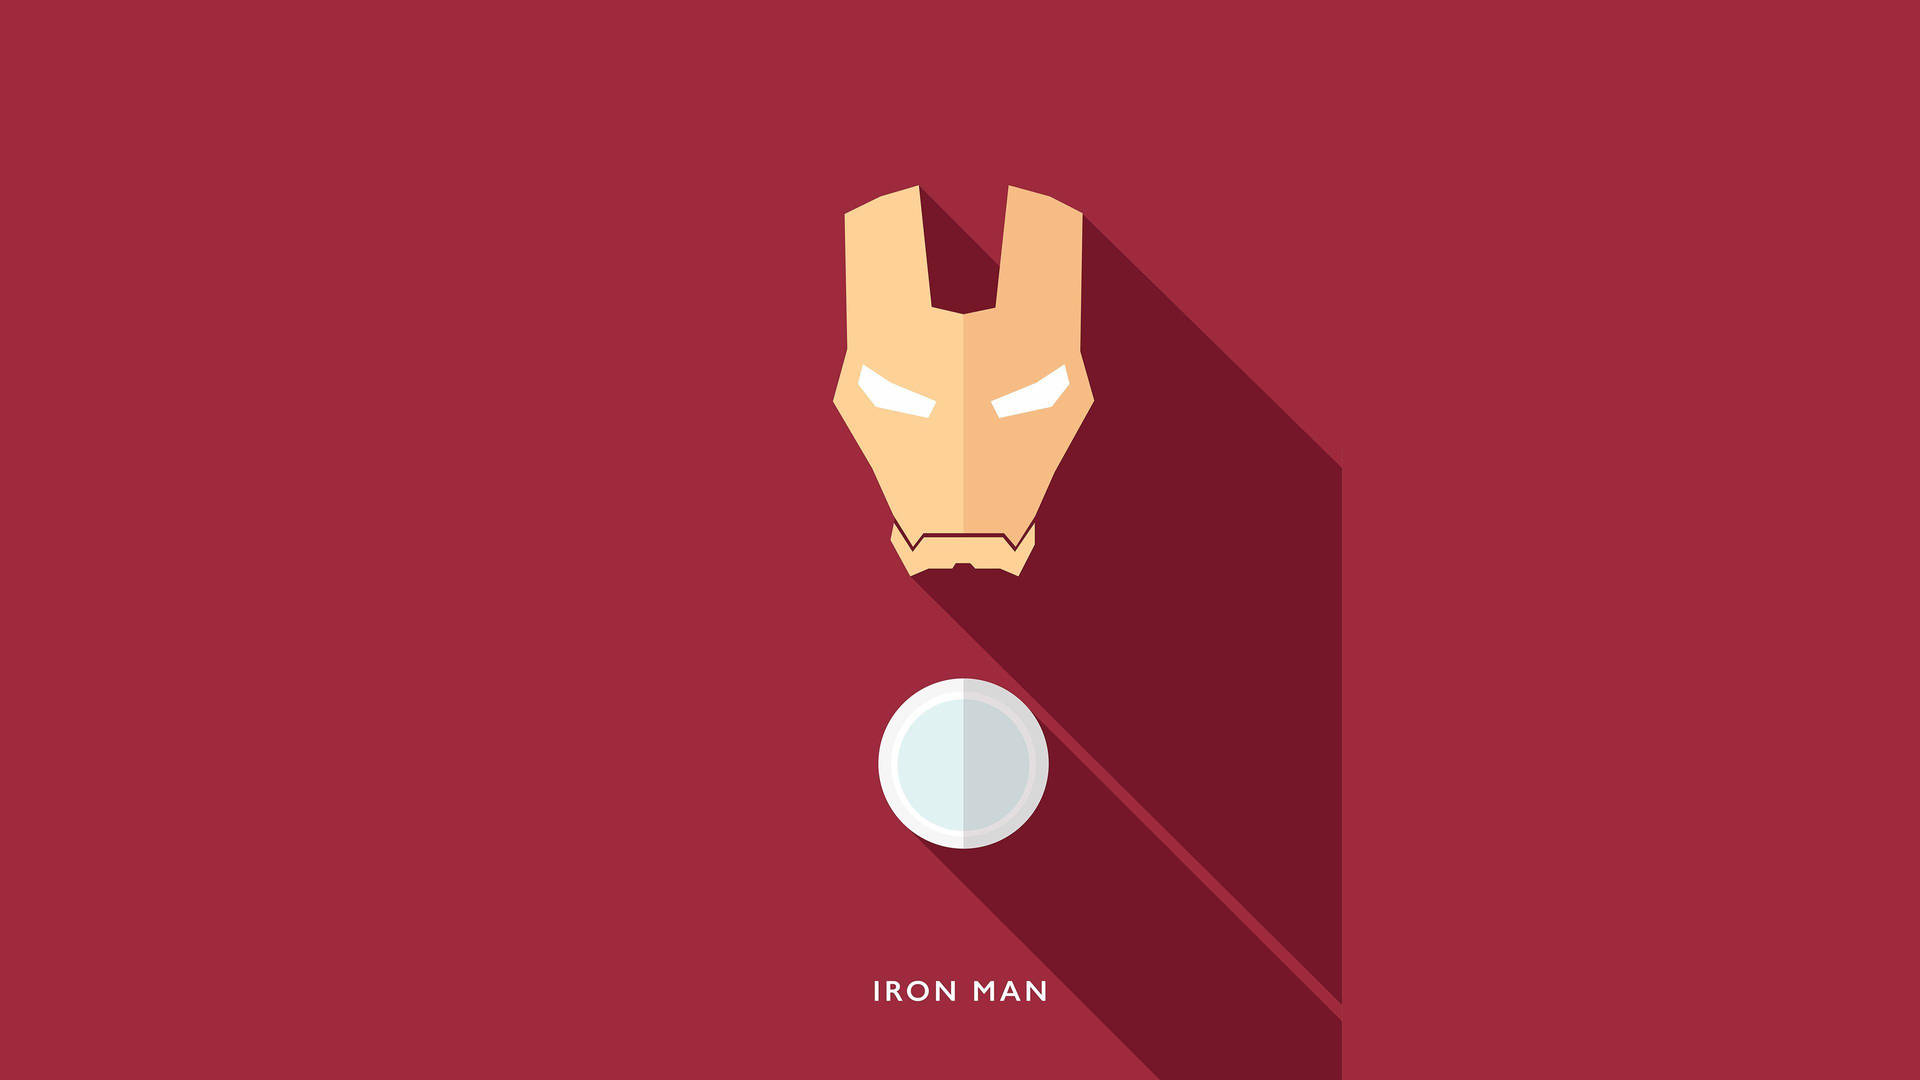 Minimalist Graphic Design Iron Man Superhero Wallpaper